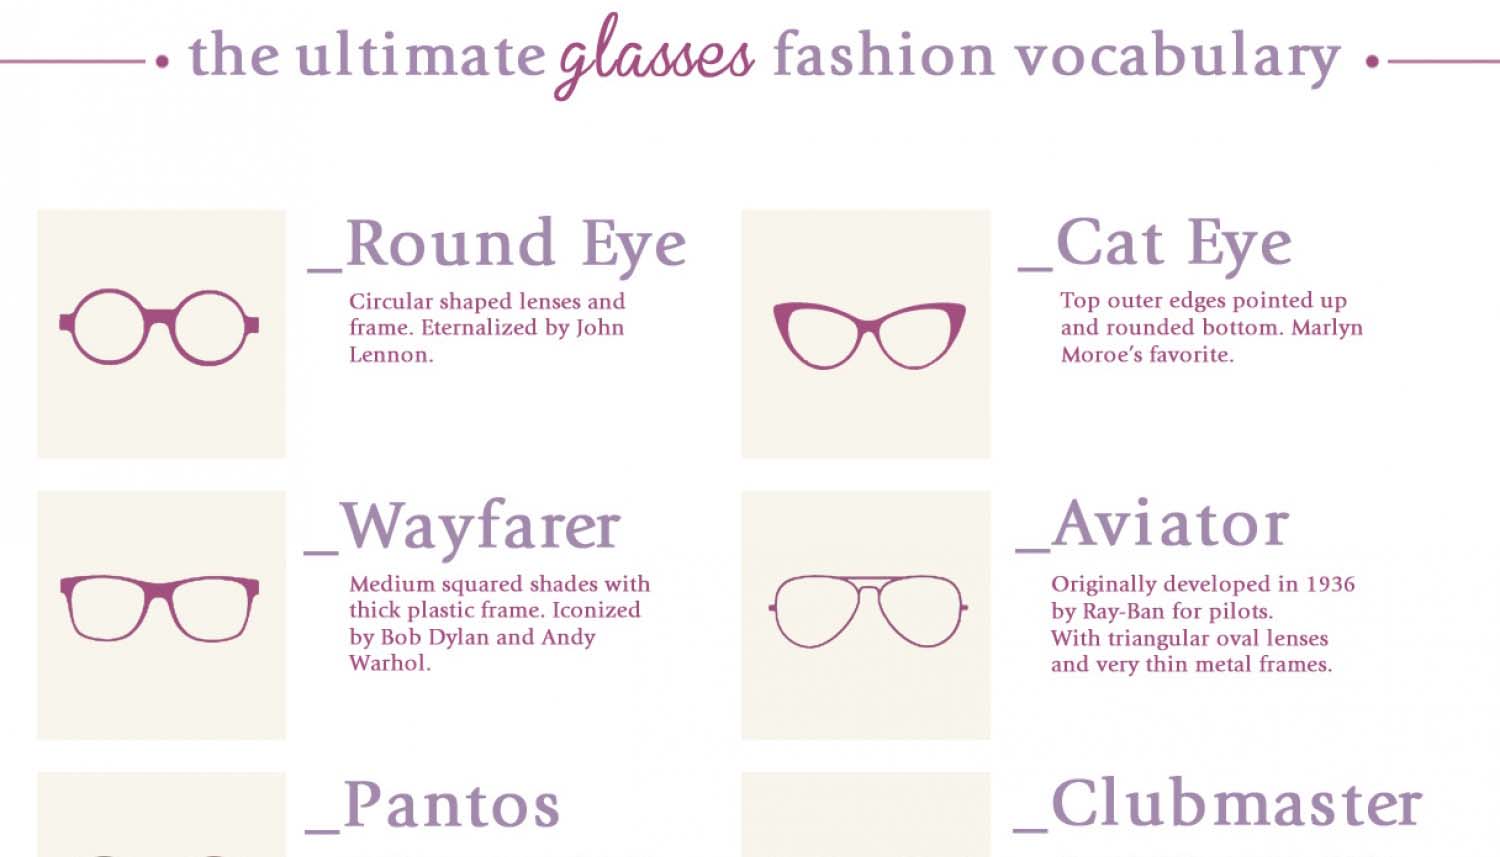 The Ultimate Glasses Fashion Vocabulary